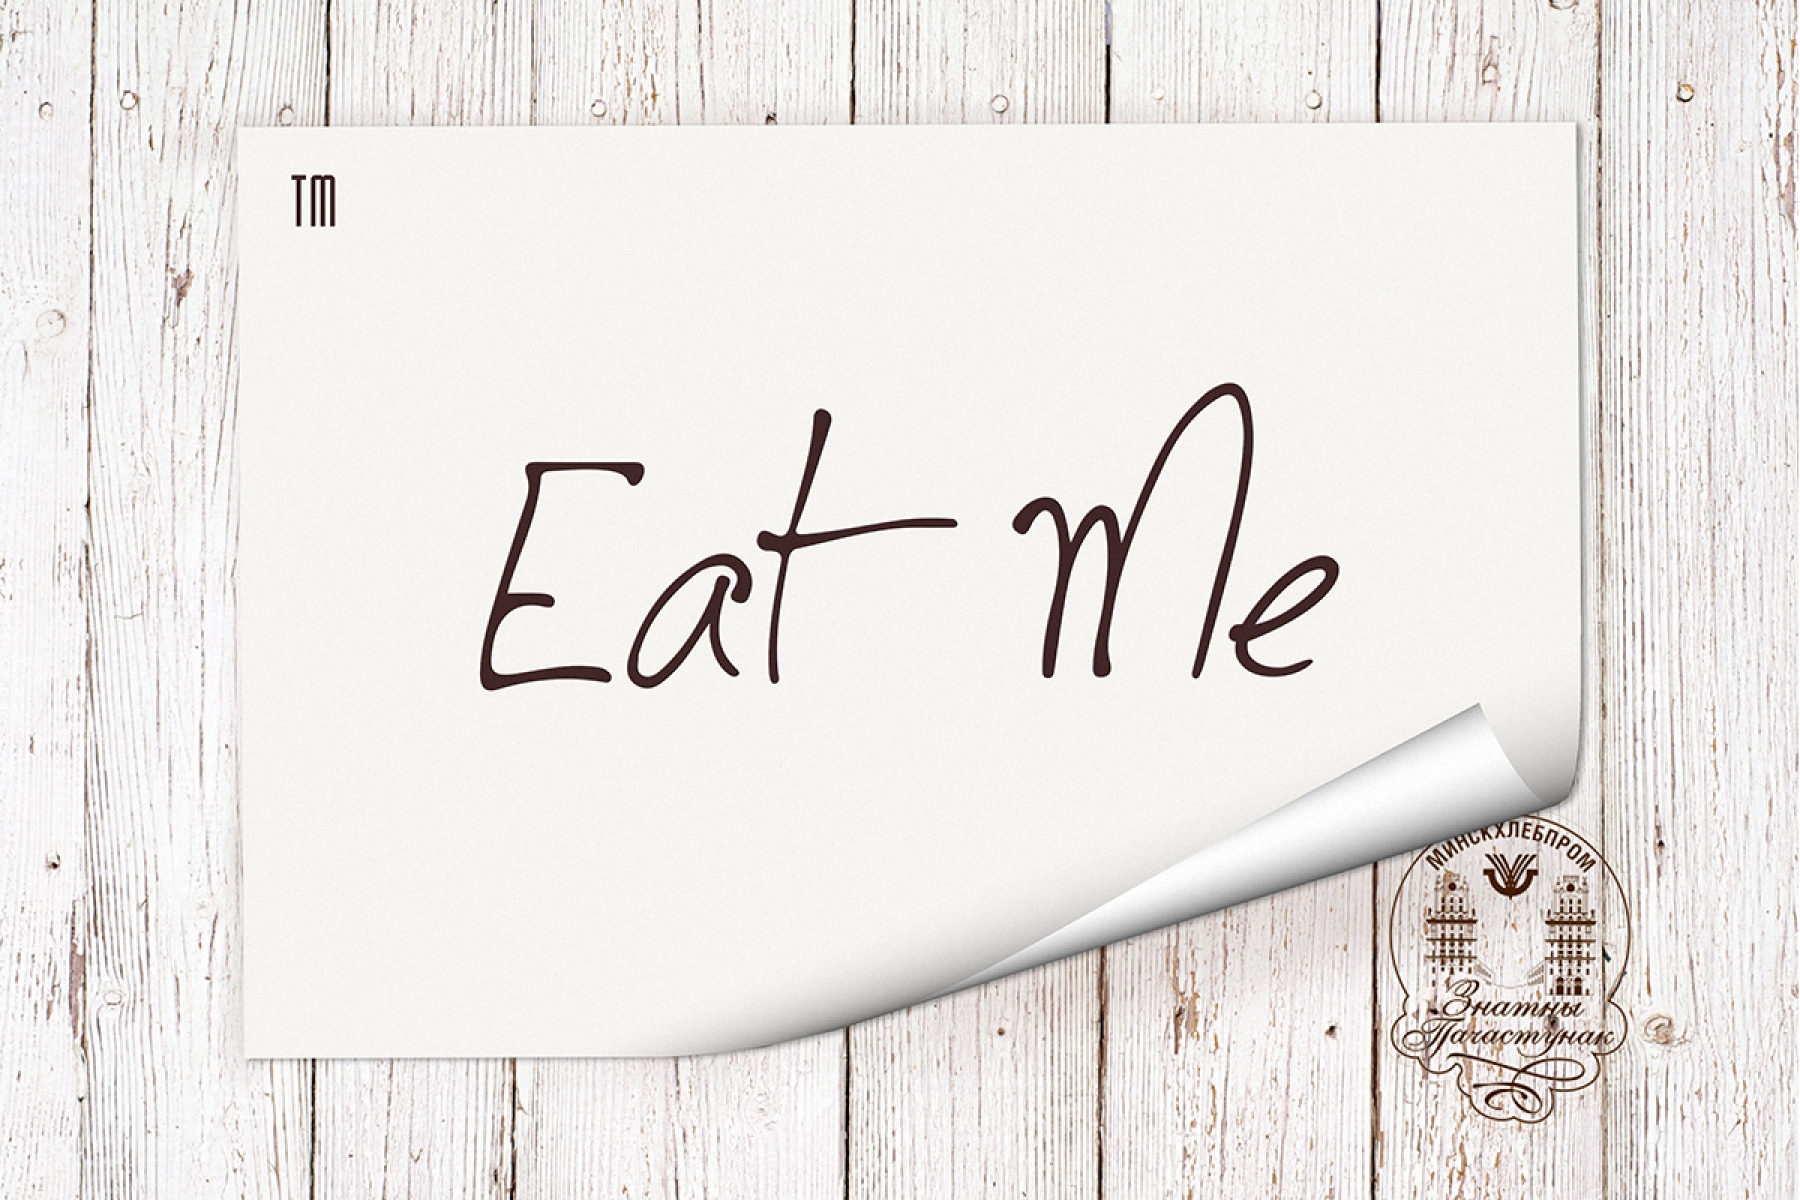 Комплексная разработка ТМ "Eat Me", дизайн упаковки